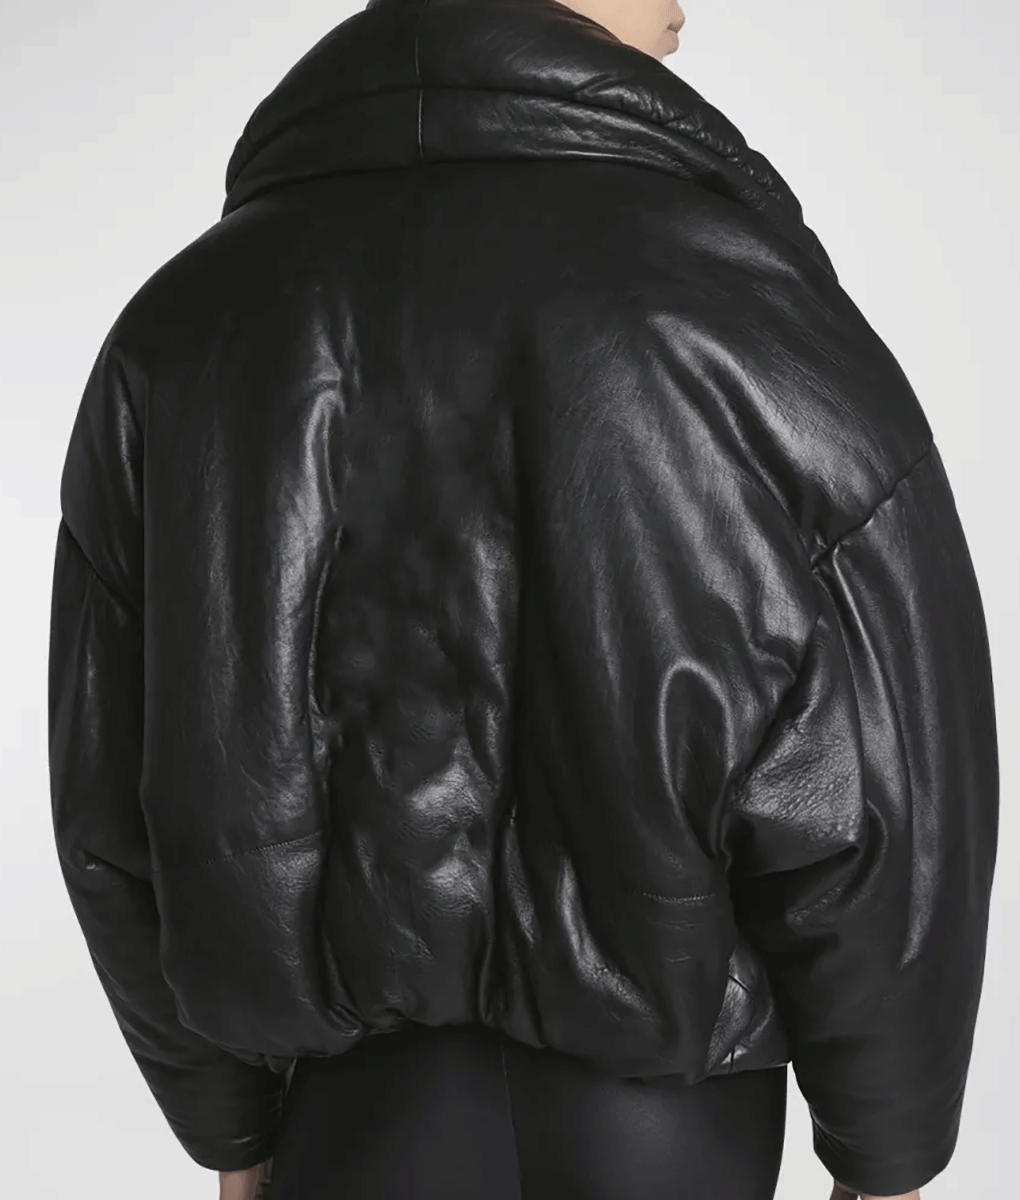 Mariah Carey Black Leather Jacket (6)